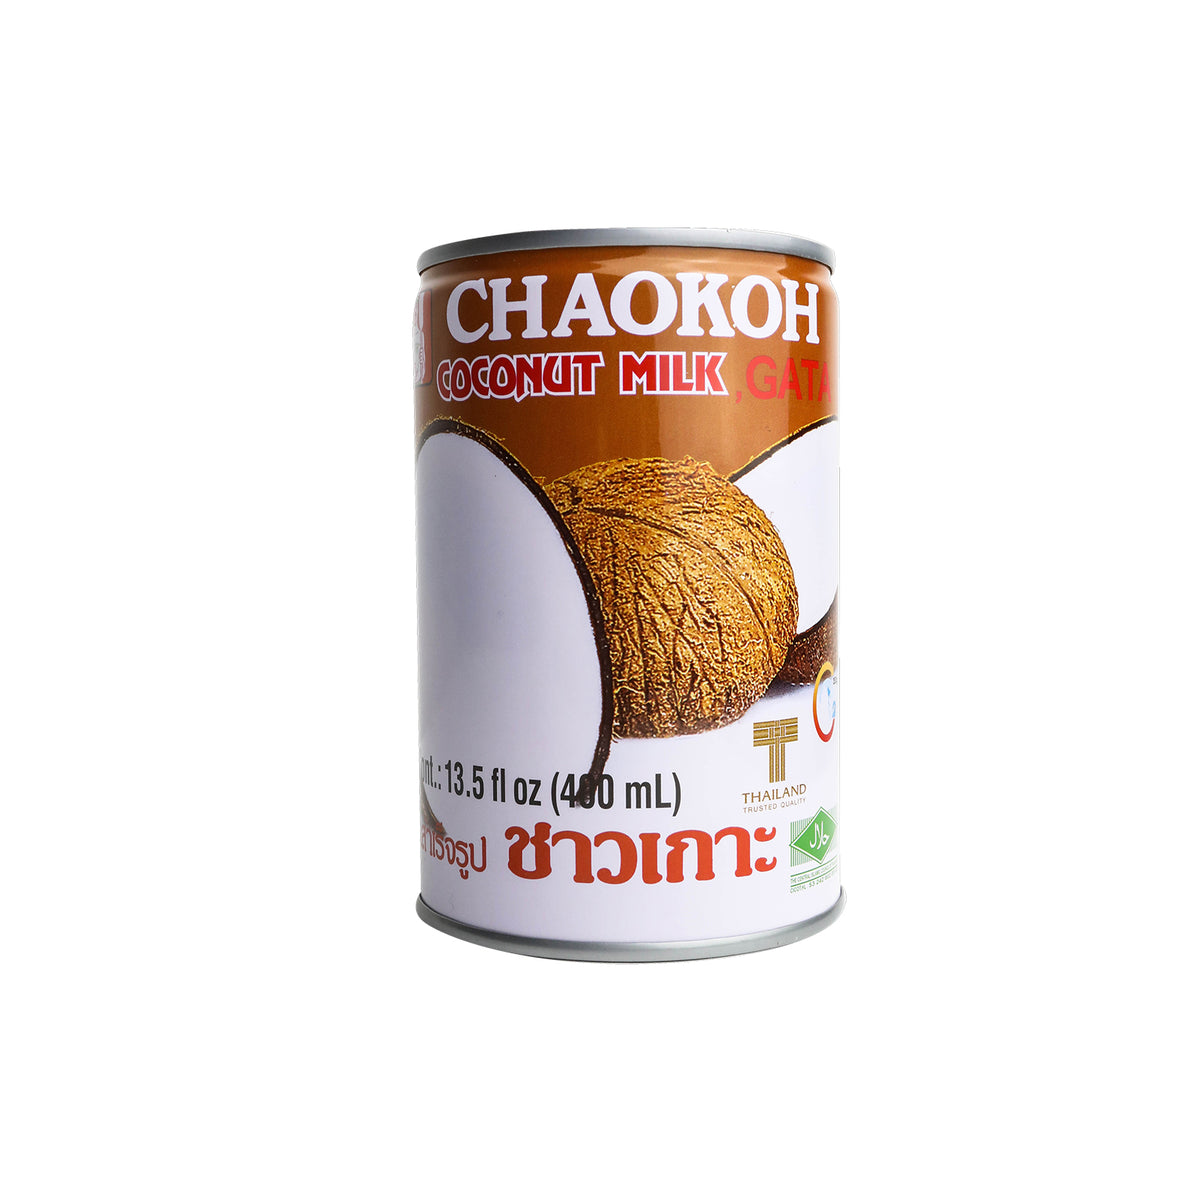 chaokoh coconut milk - 13.5fl oz